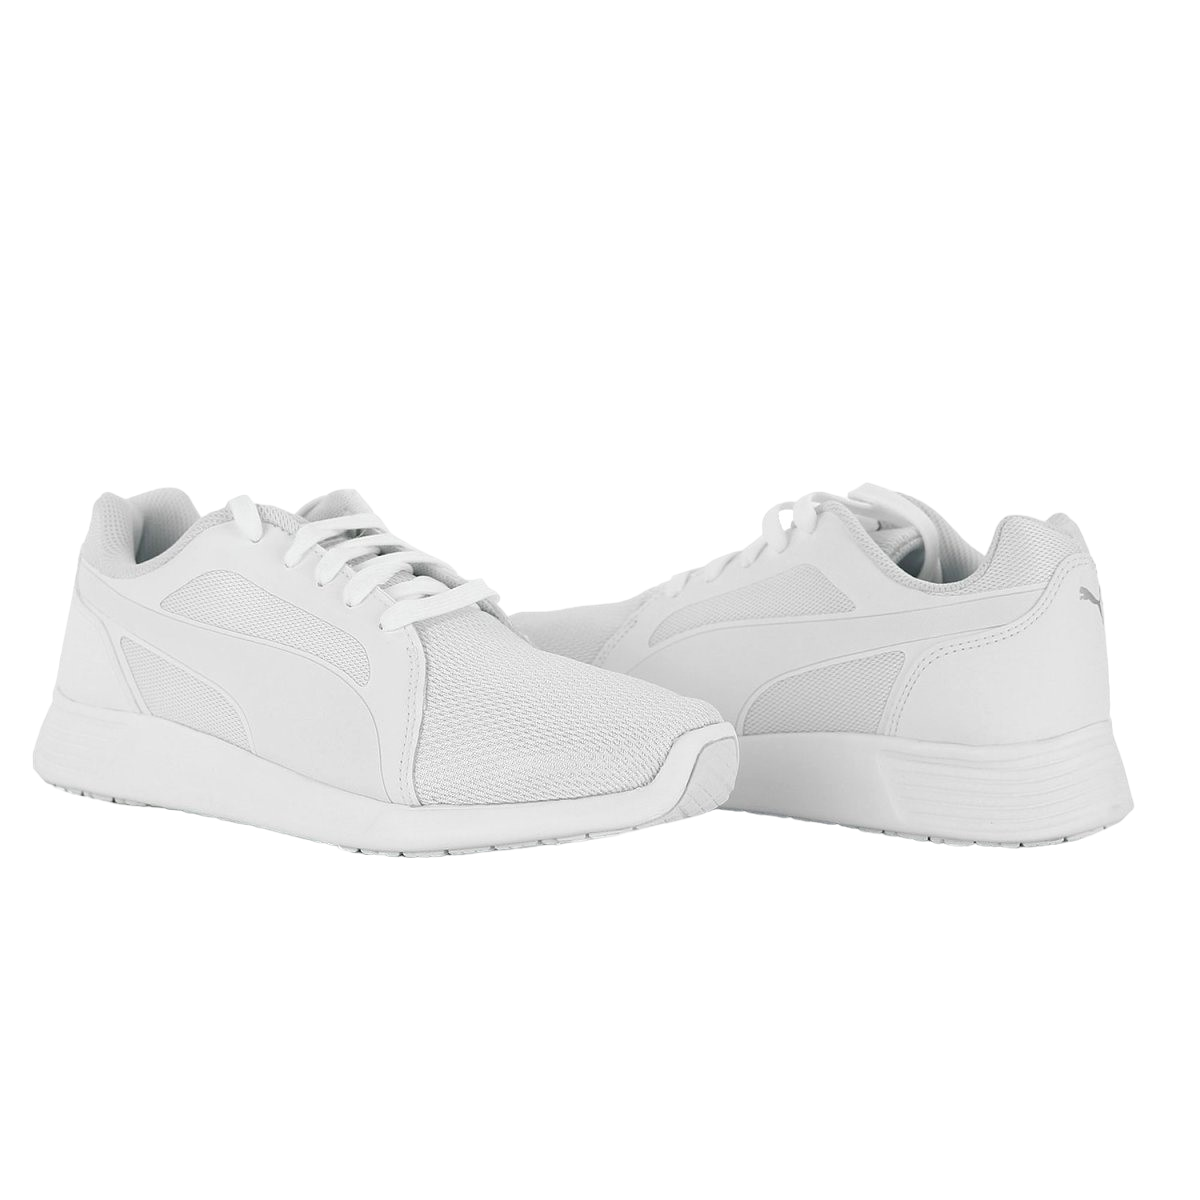 Puma scarpa da ginnastica Trainer Evo Tech 360478 06 bianco